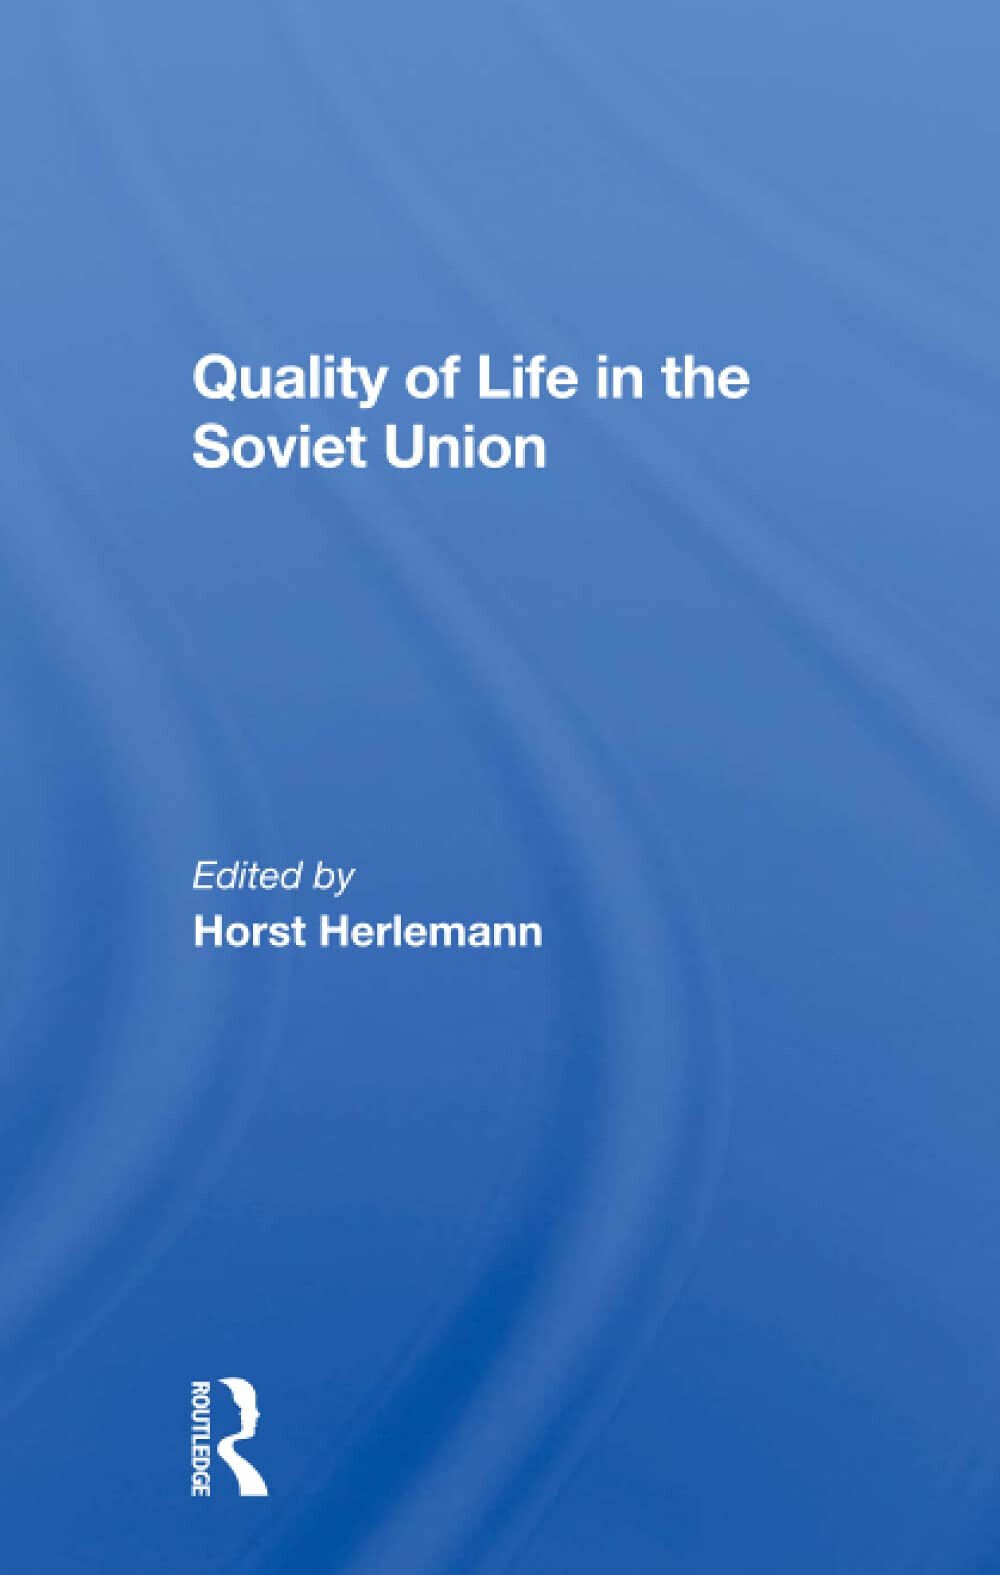 Quality Of Life In The Soviet Union - Horst Herlemann, Shaun Murphy - 2021